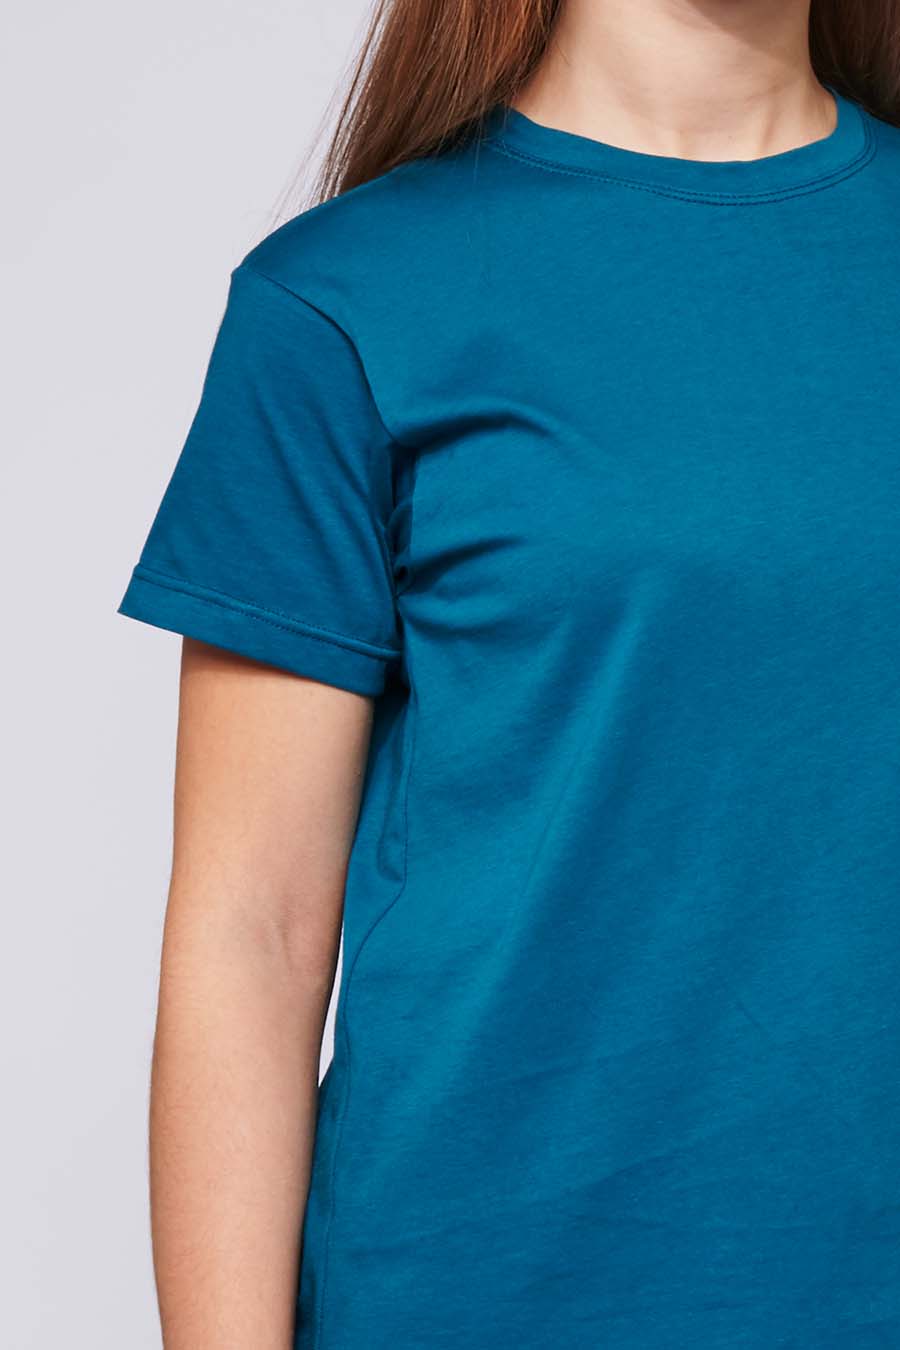 Zoom Tee-shirt femme made in France en coton bio BRIGITTE pétrole - FIL ROUGE